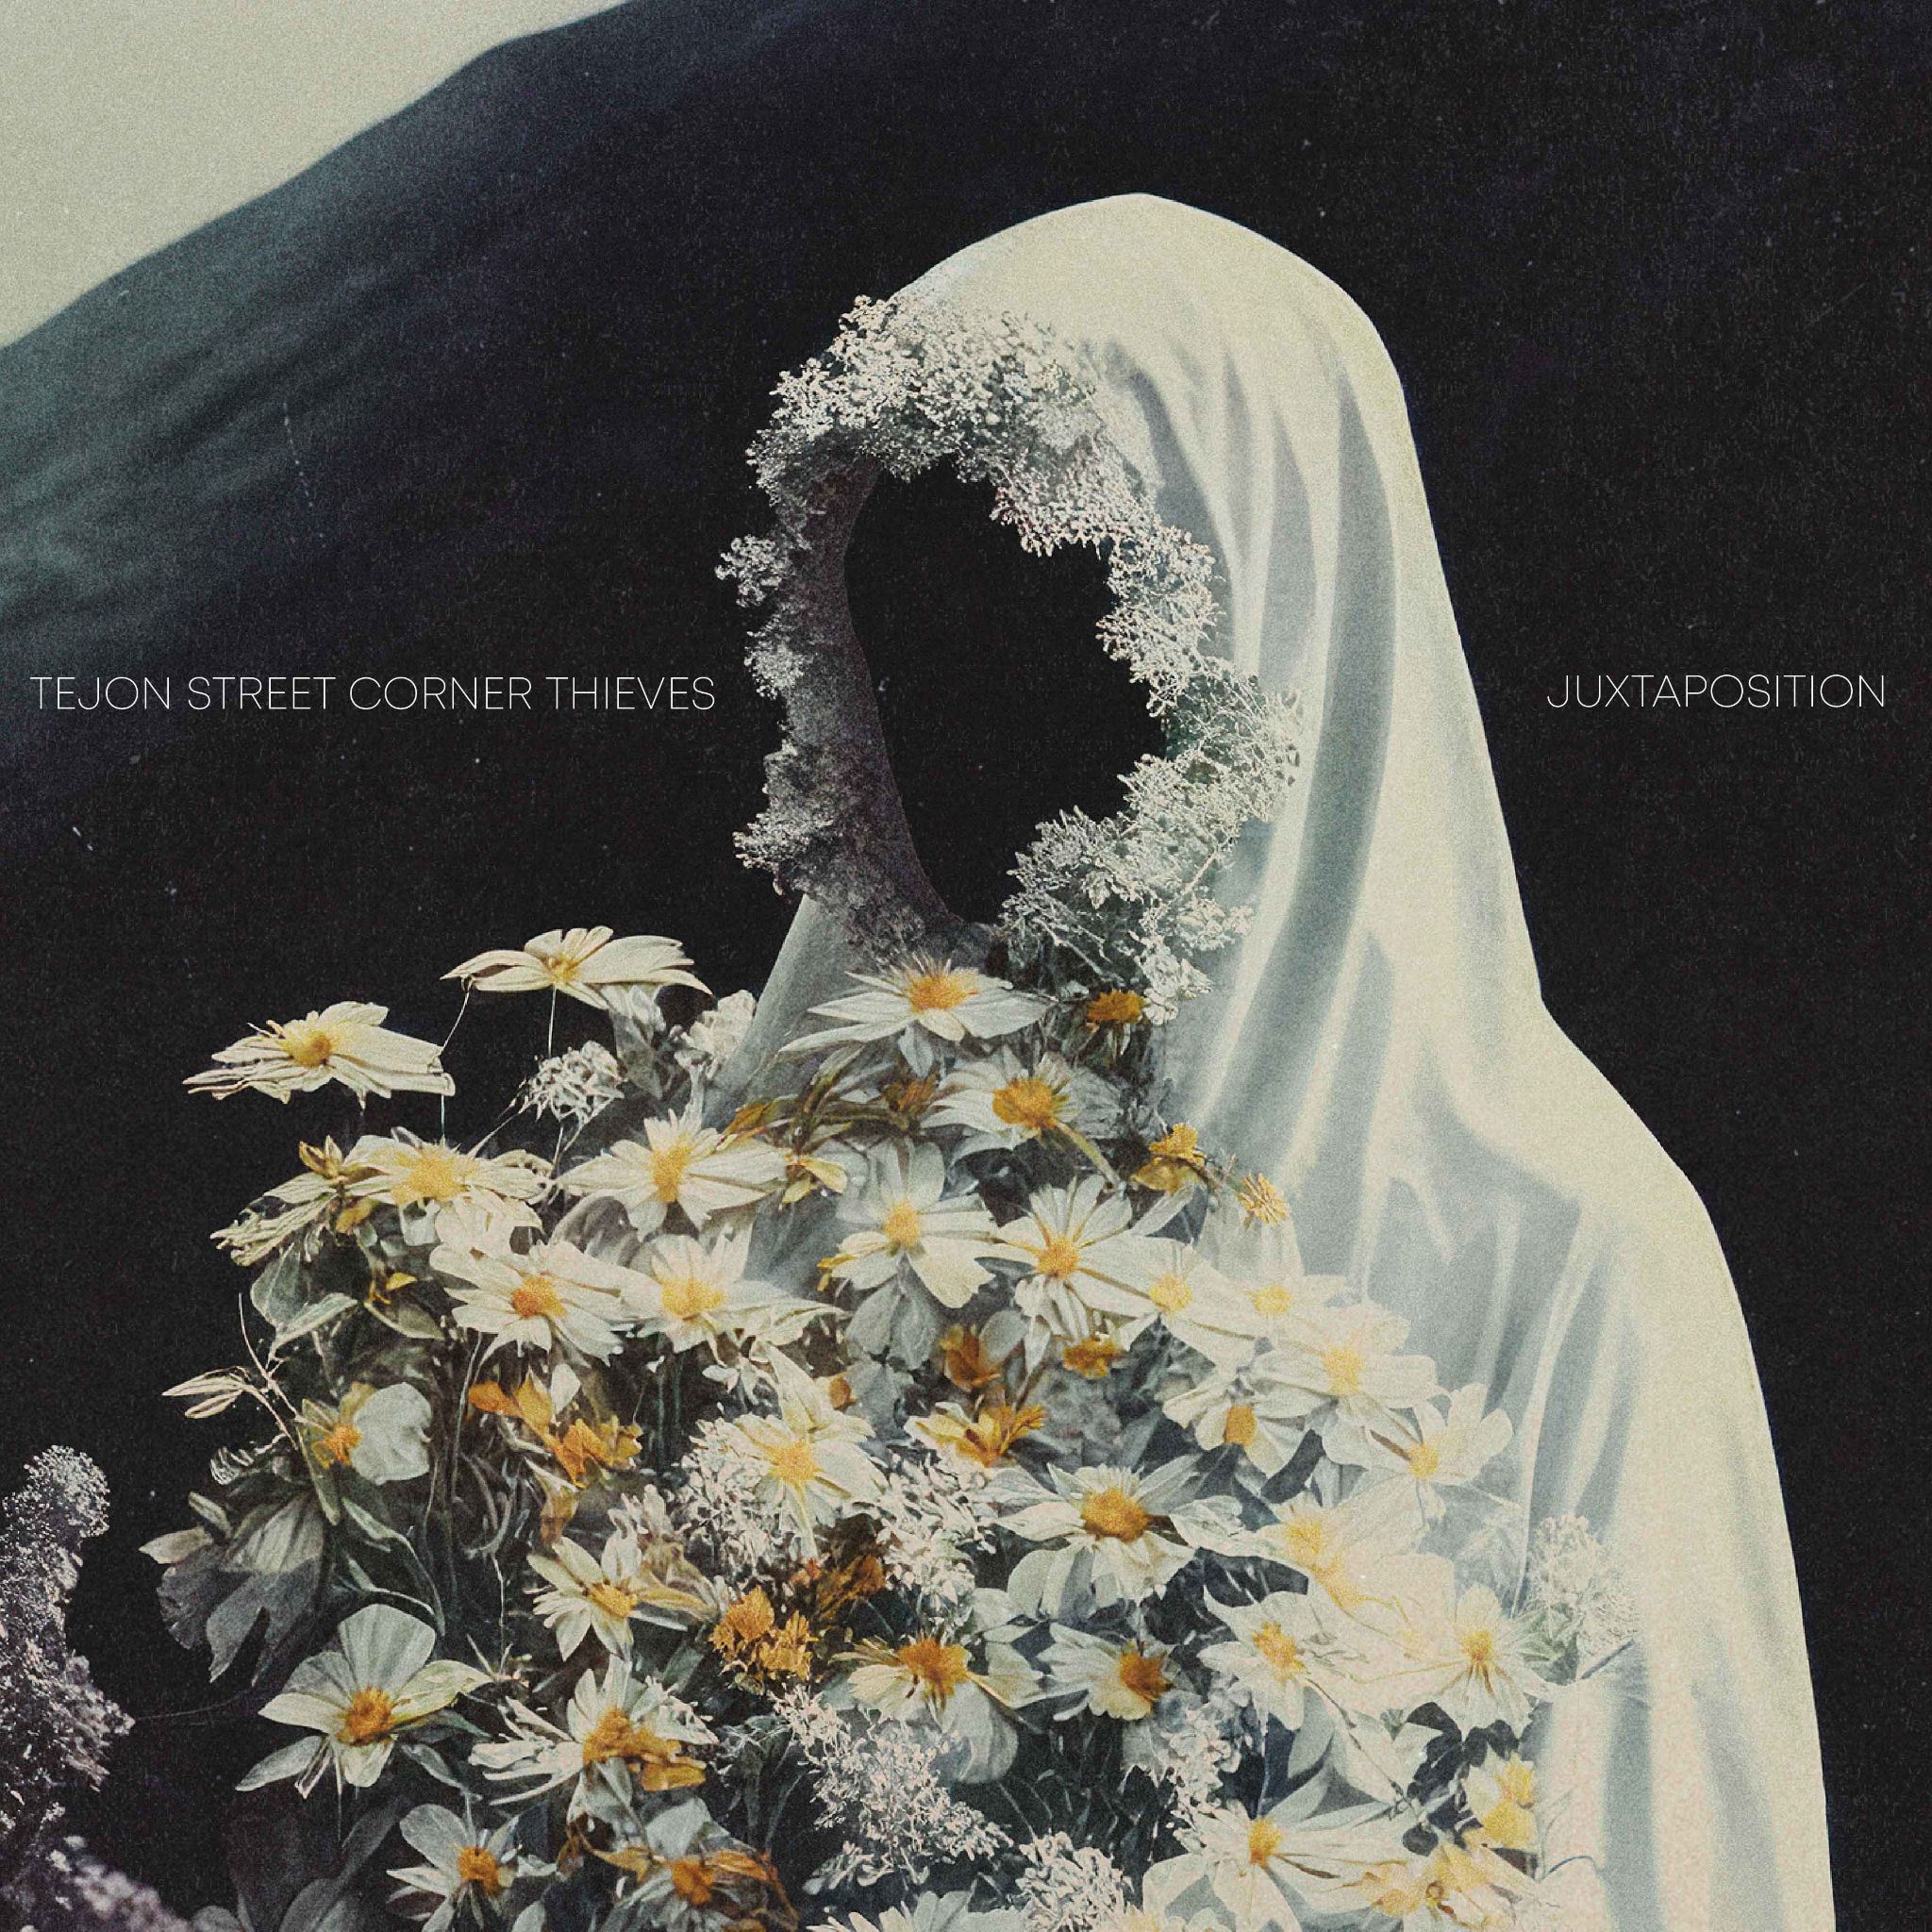 Tejon Street Corner Thieves Announce New Album ‘Juxtaposition’ & Release New Song